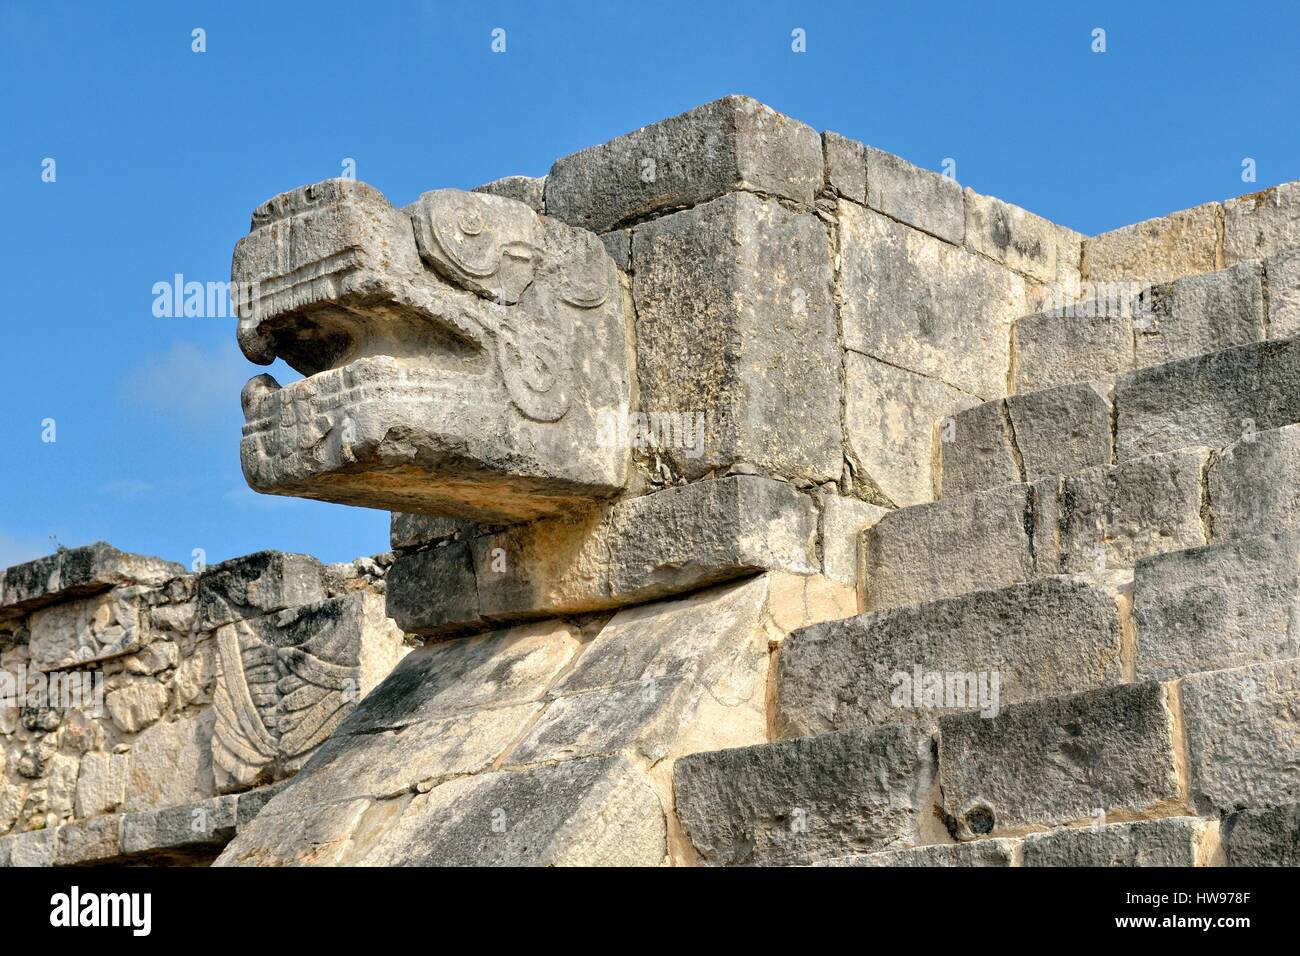 Snakehead, Plataforma de Venus, Venus Platform, historic Mayan city of Chichen Itza, Piste, Yucatan, Mexico Stock Photo